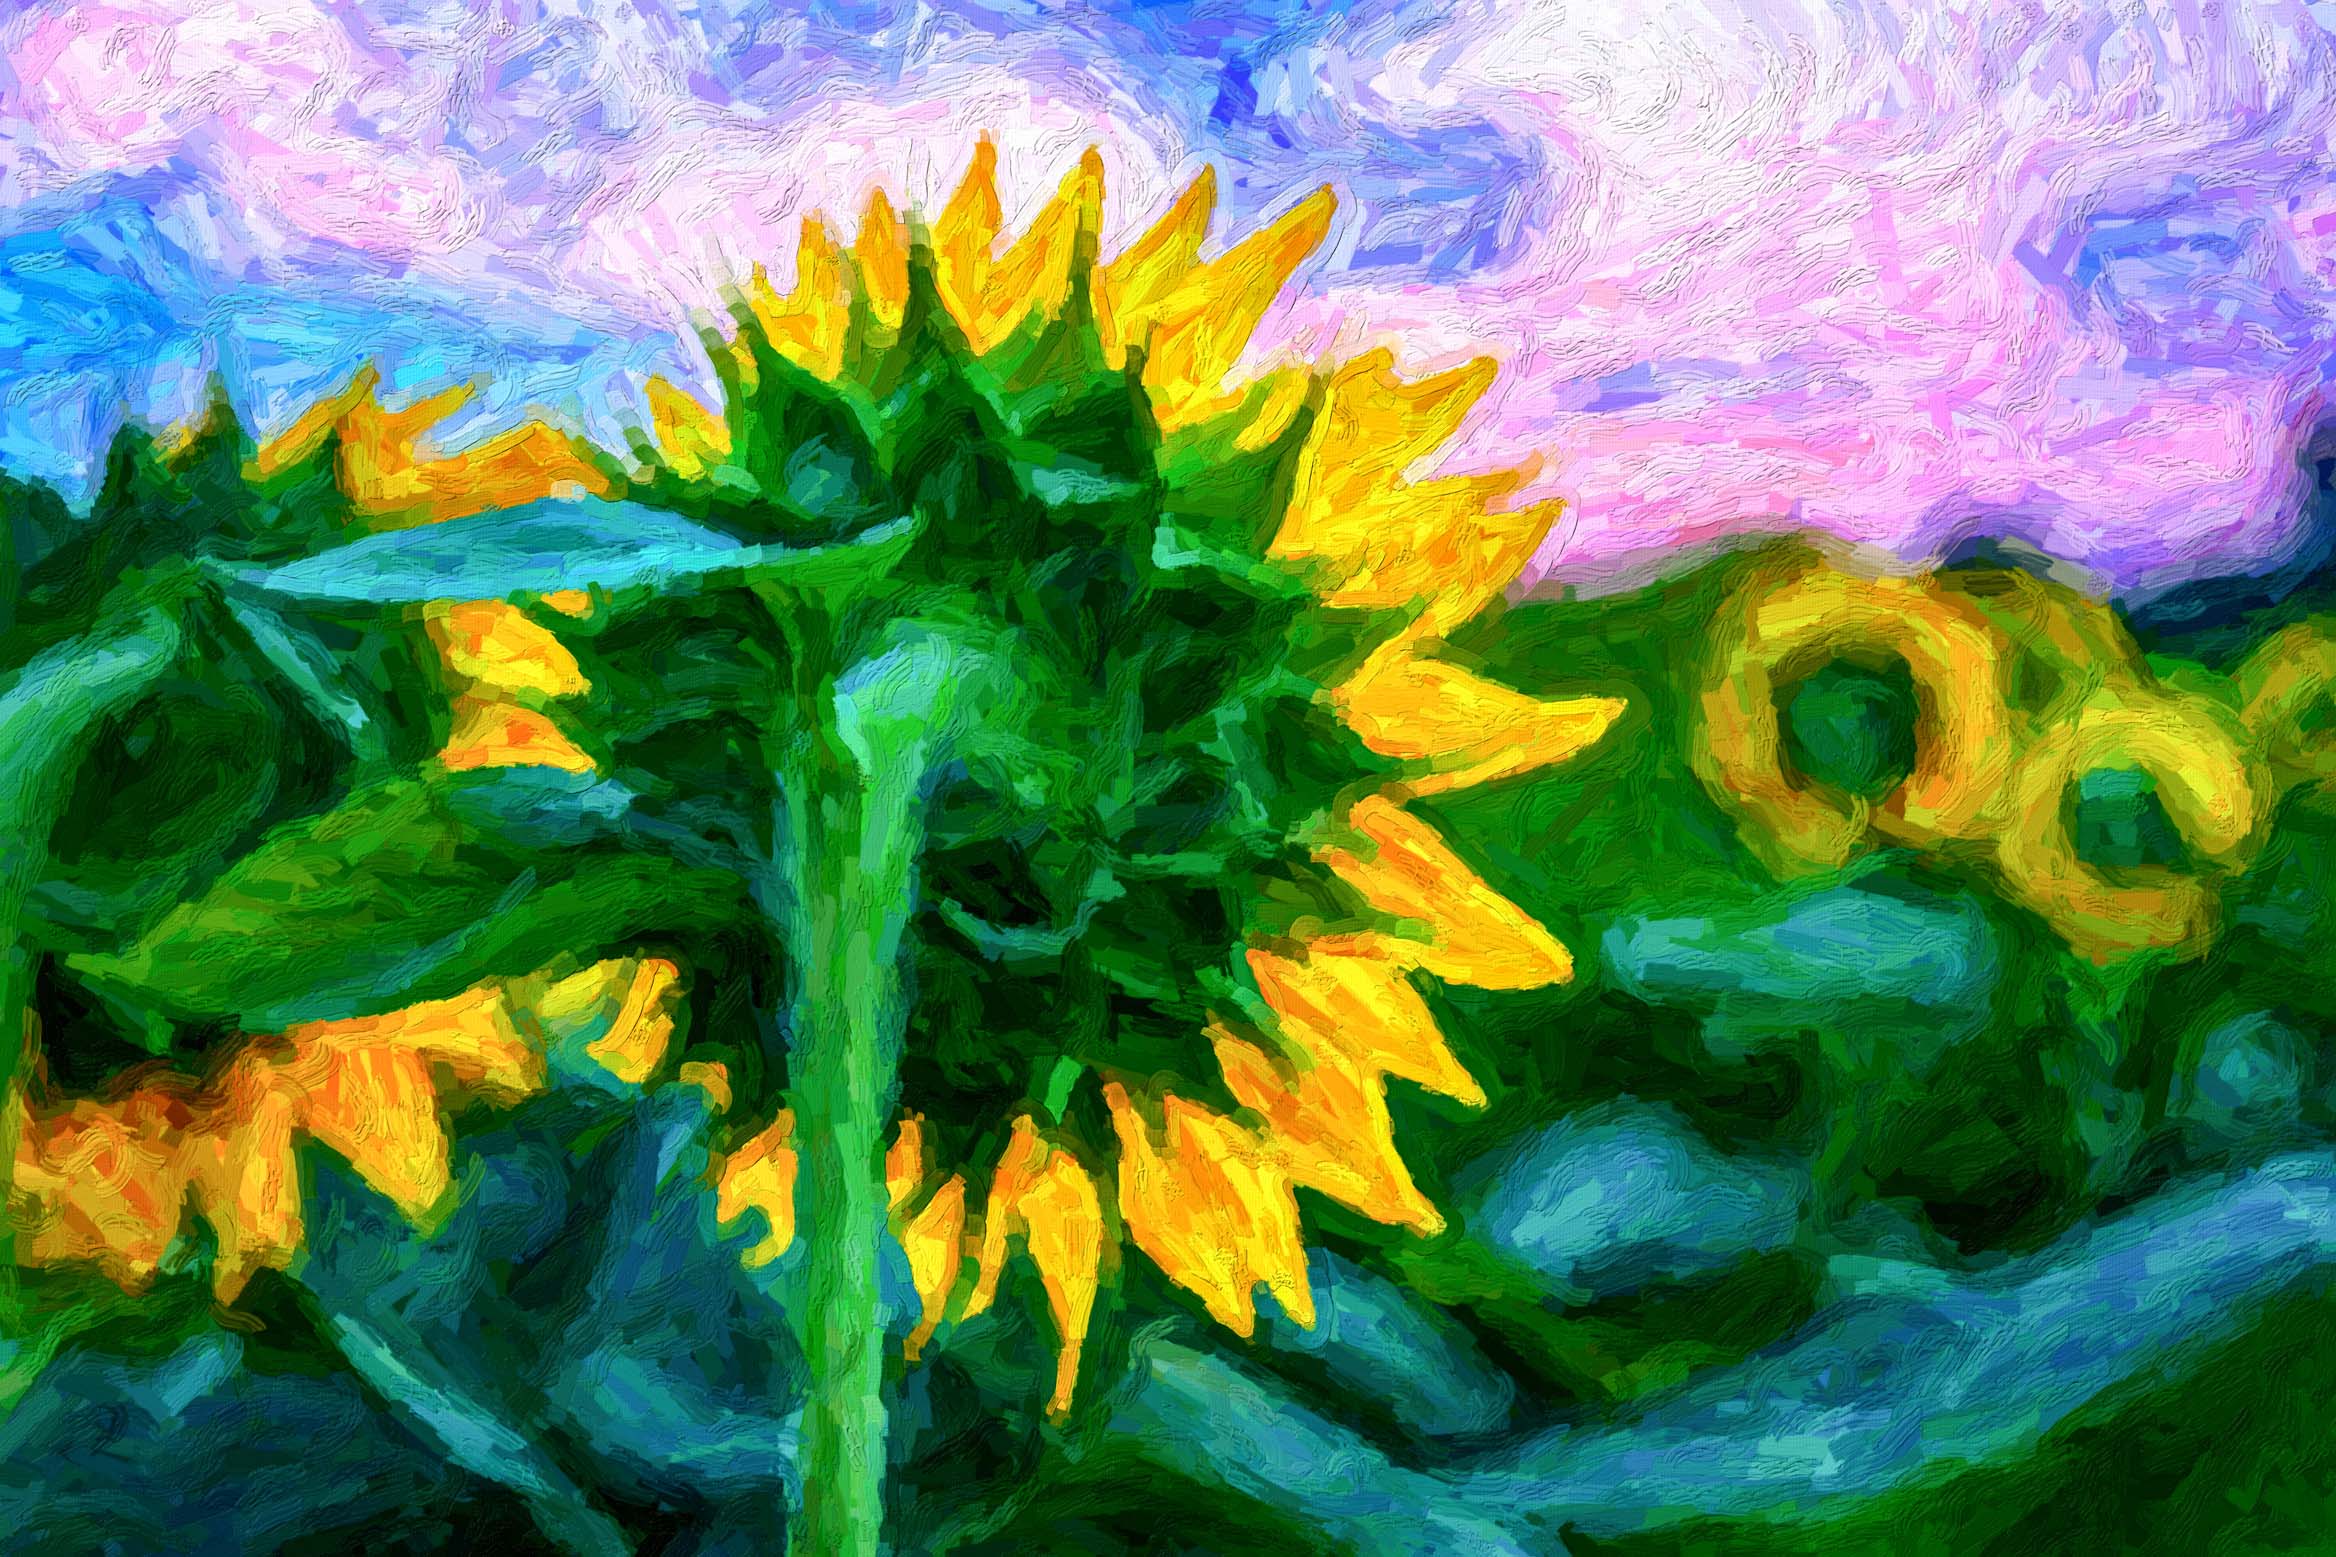 04x06_van-gogh-sunflower_landscape.jpg